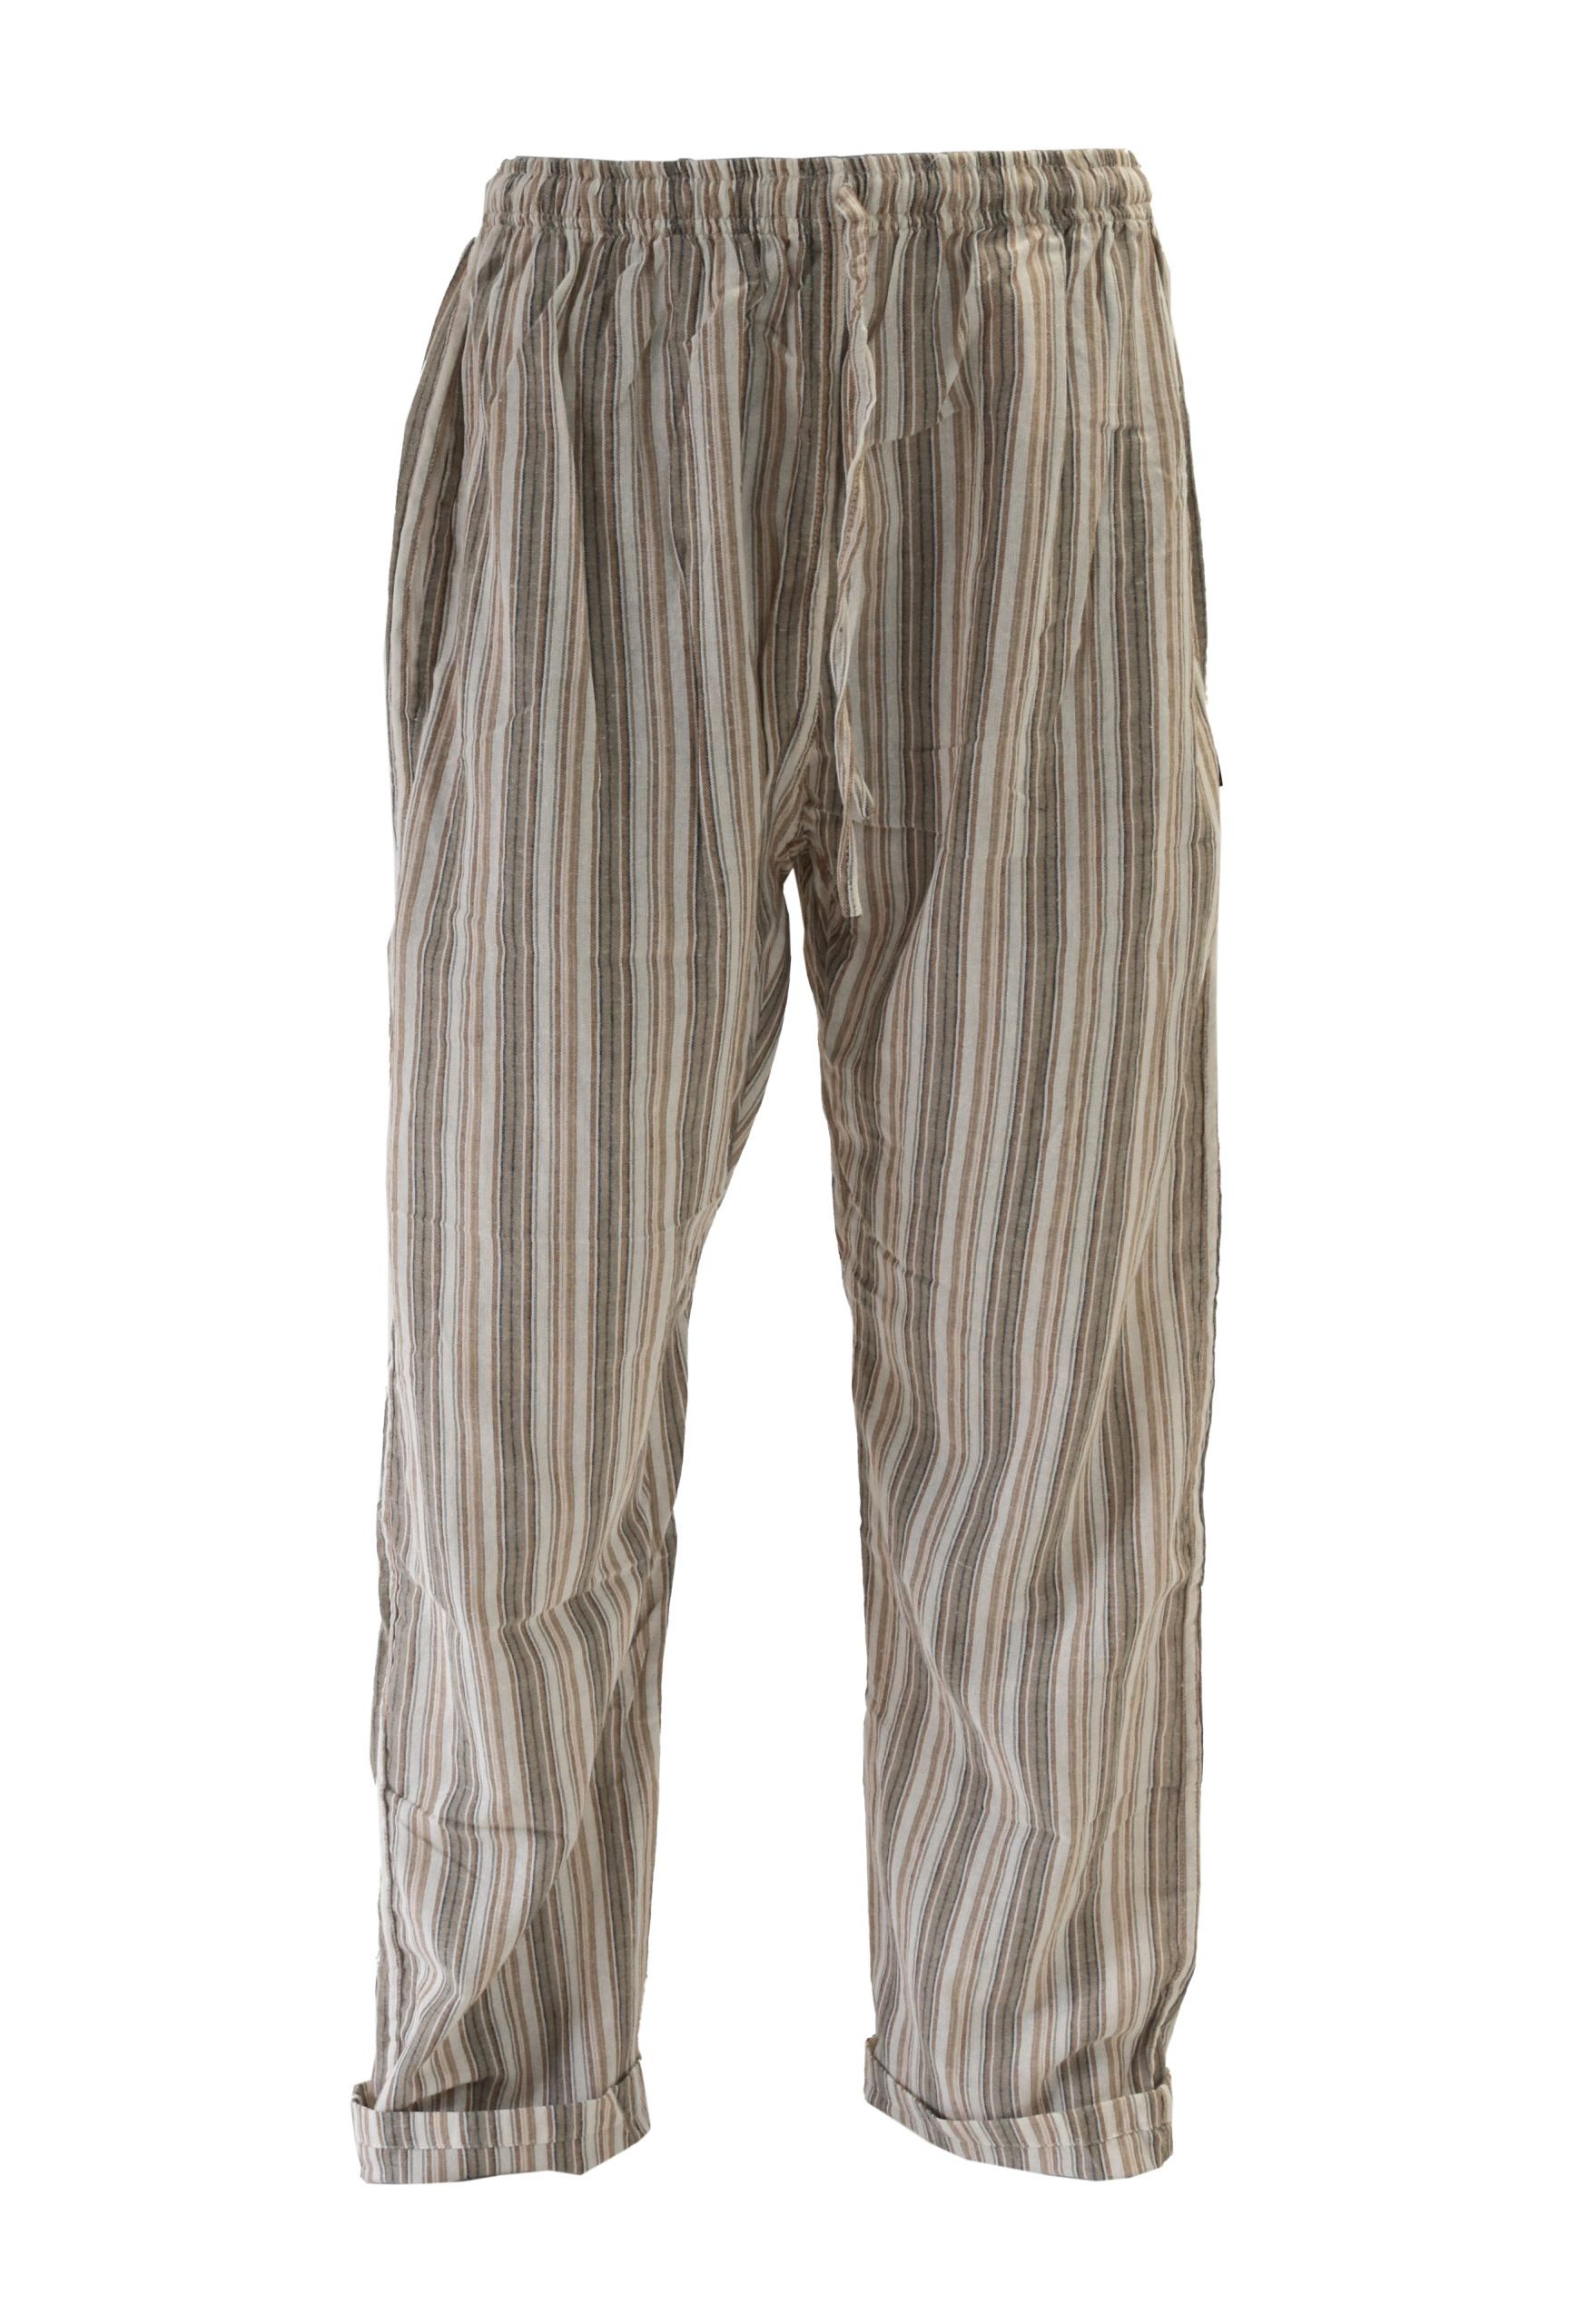 SKA Nepalese Vertical Striped PE Pants Trousers- Natural Brown